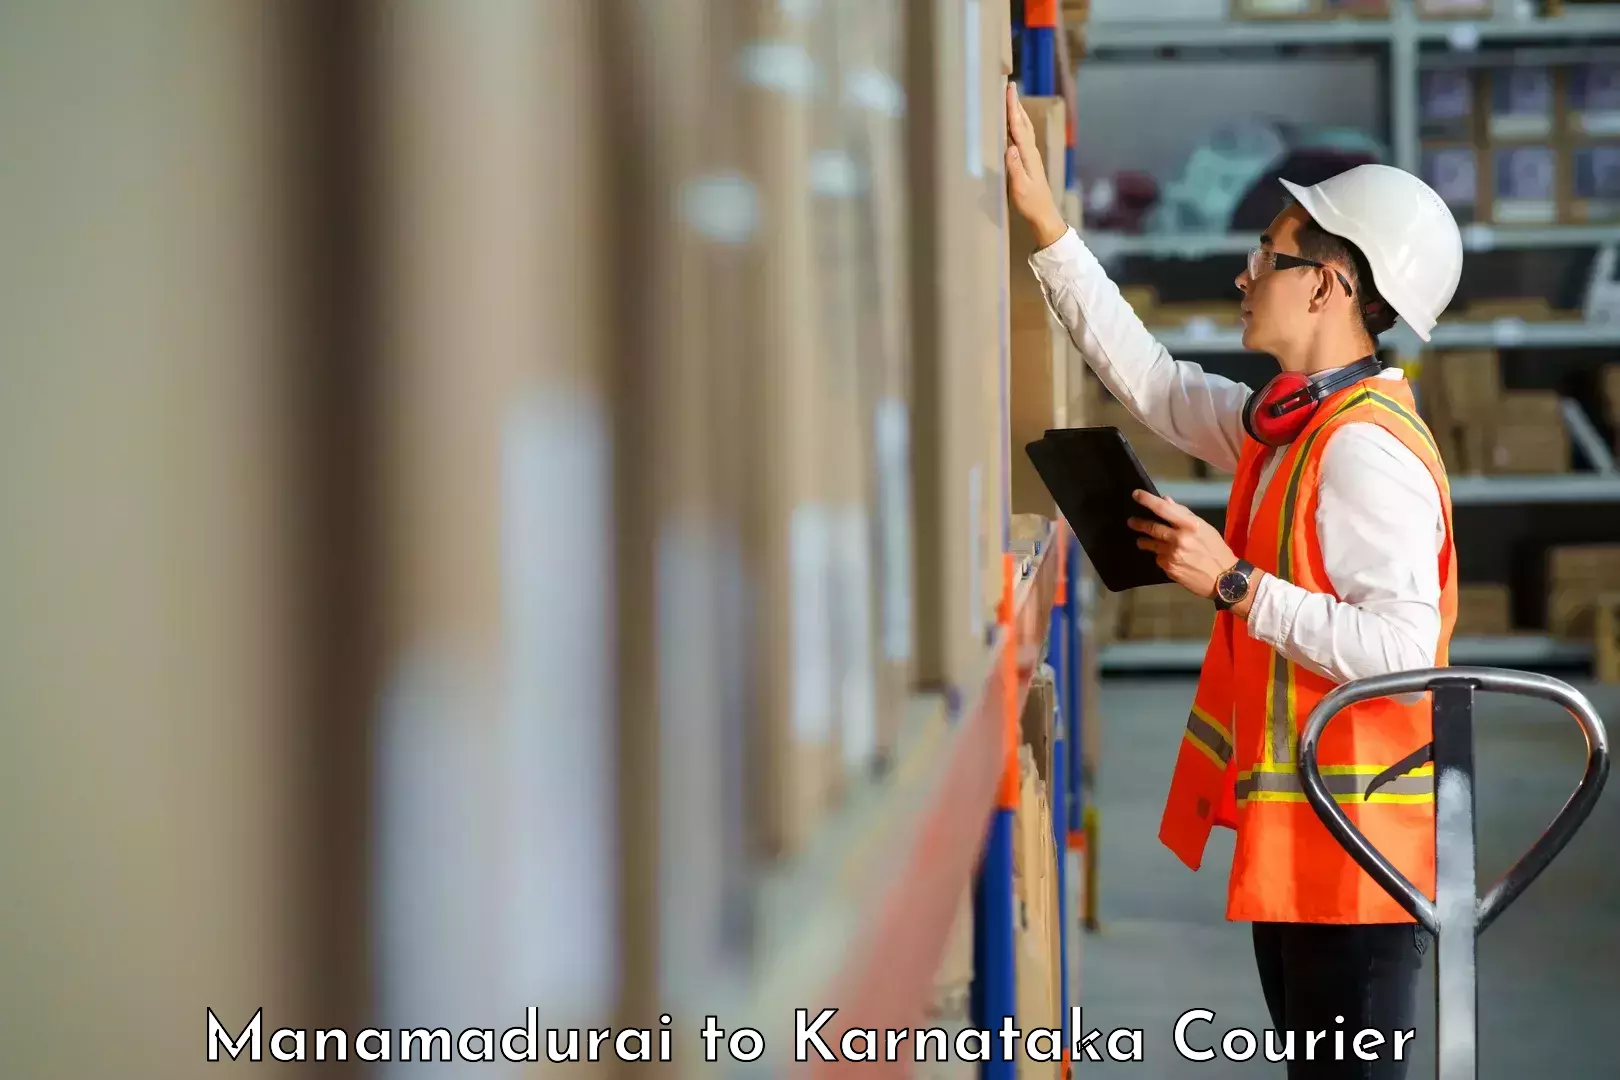 State-of-the-art courier technology Manamadurai to Thirthahalli